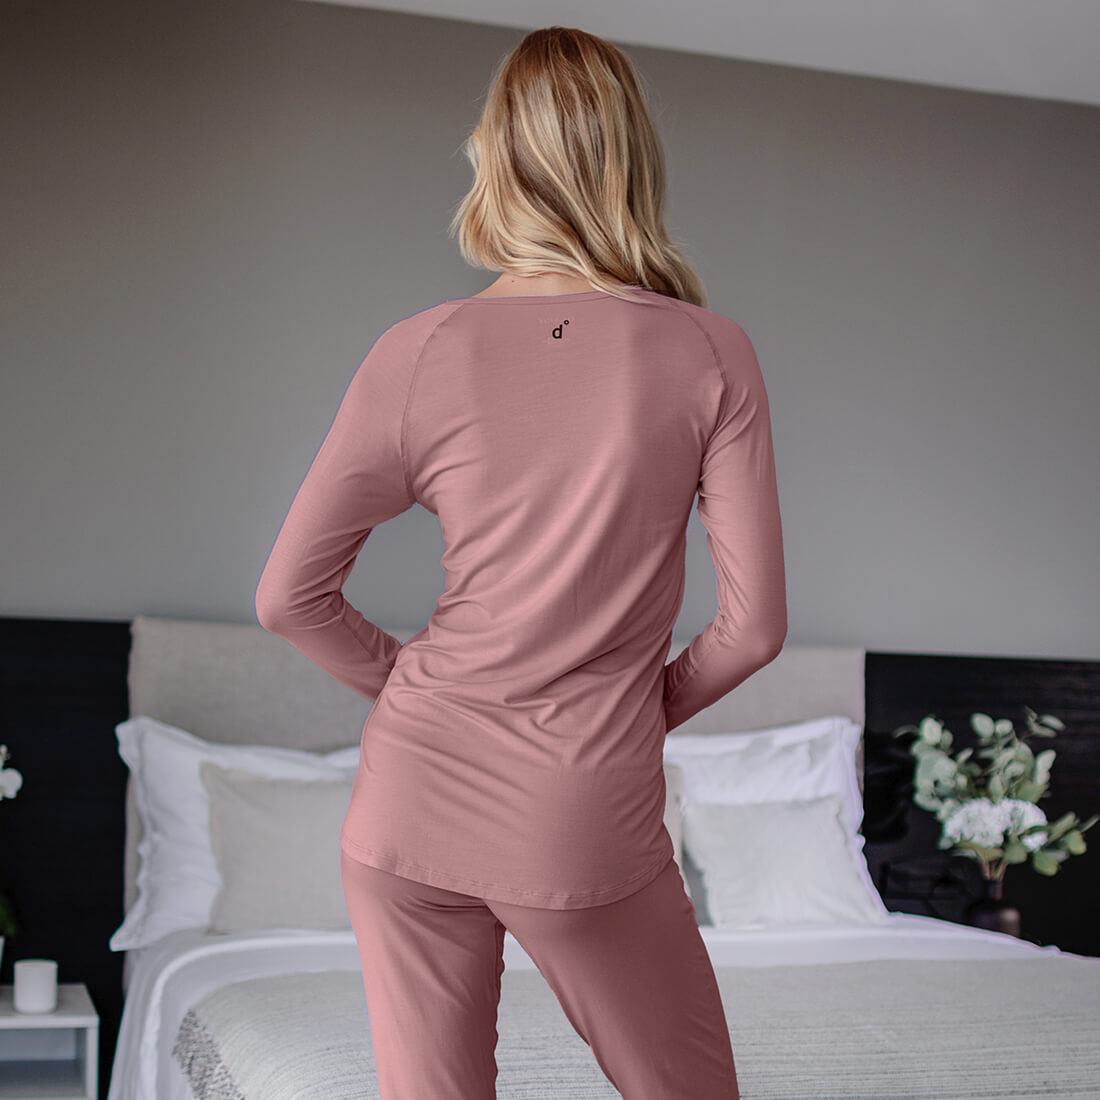 Best pajamas for women || Sunrise rose